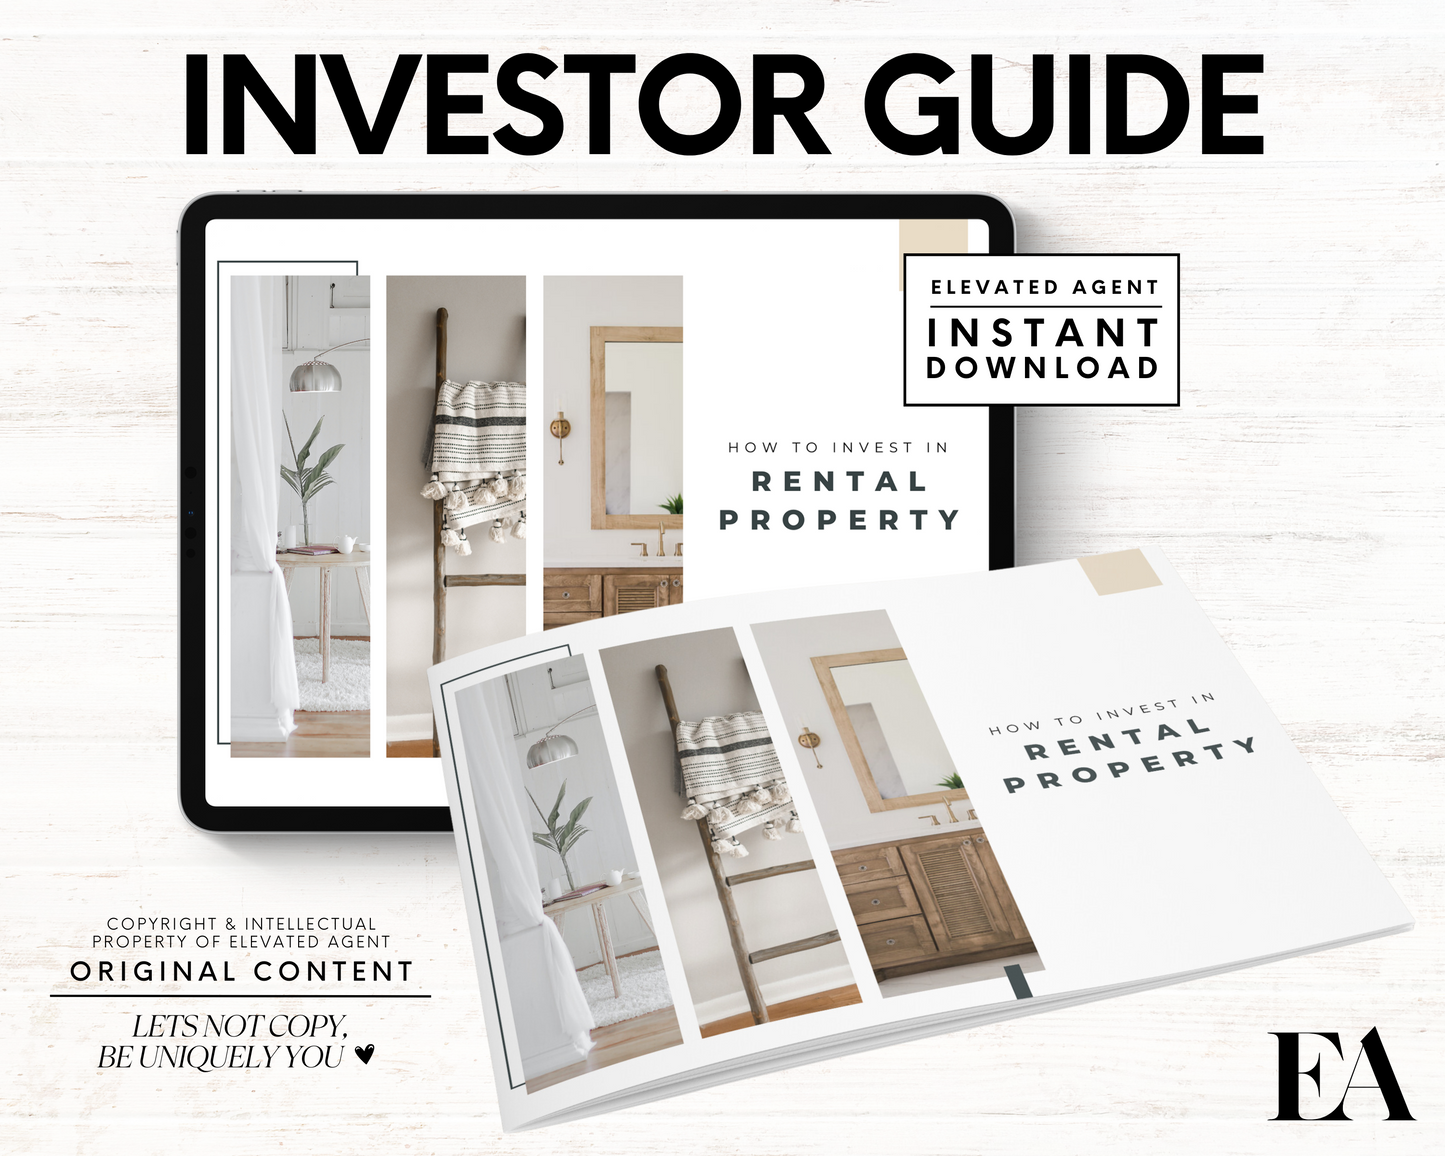 Real Estate Rental Property Guide for Investors